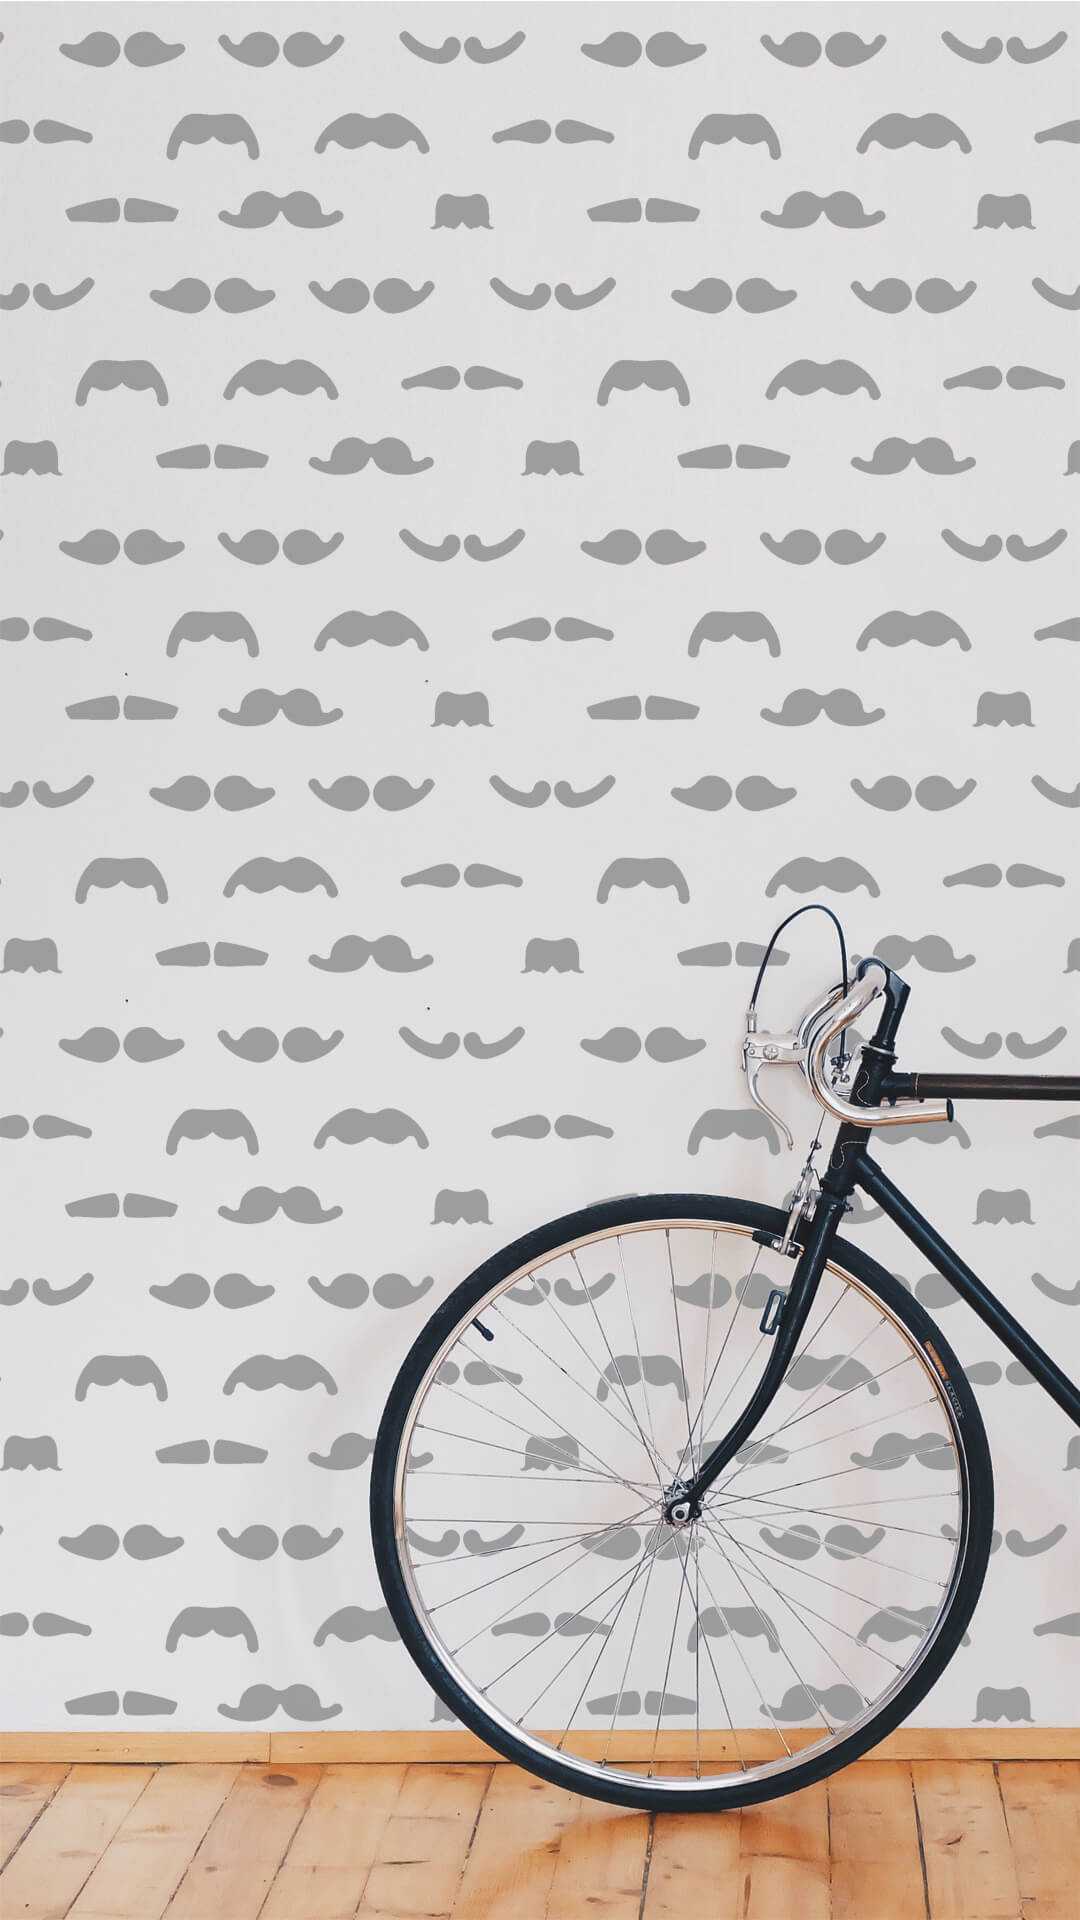 Wallpaper for men, Moustache Stickers